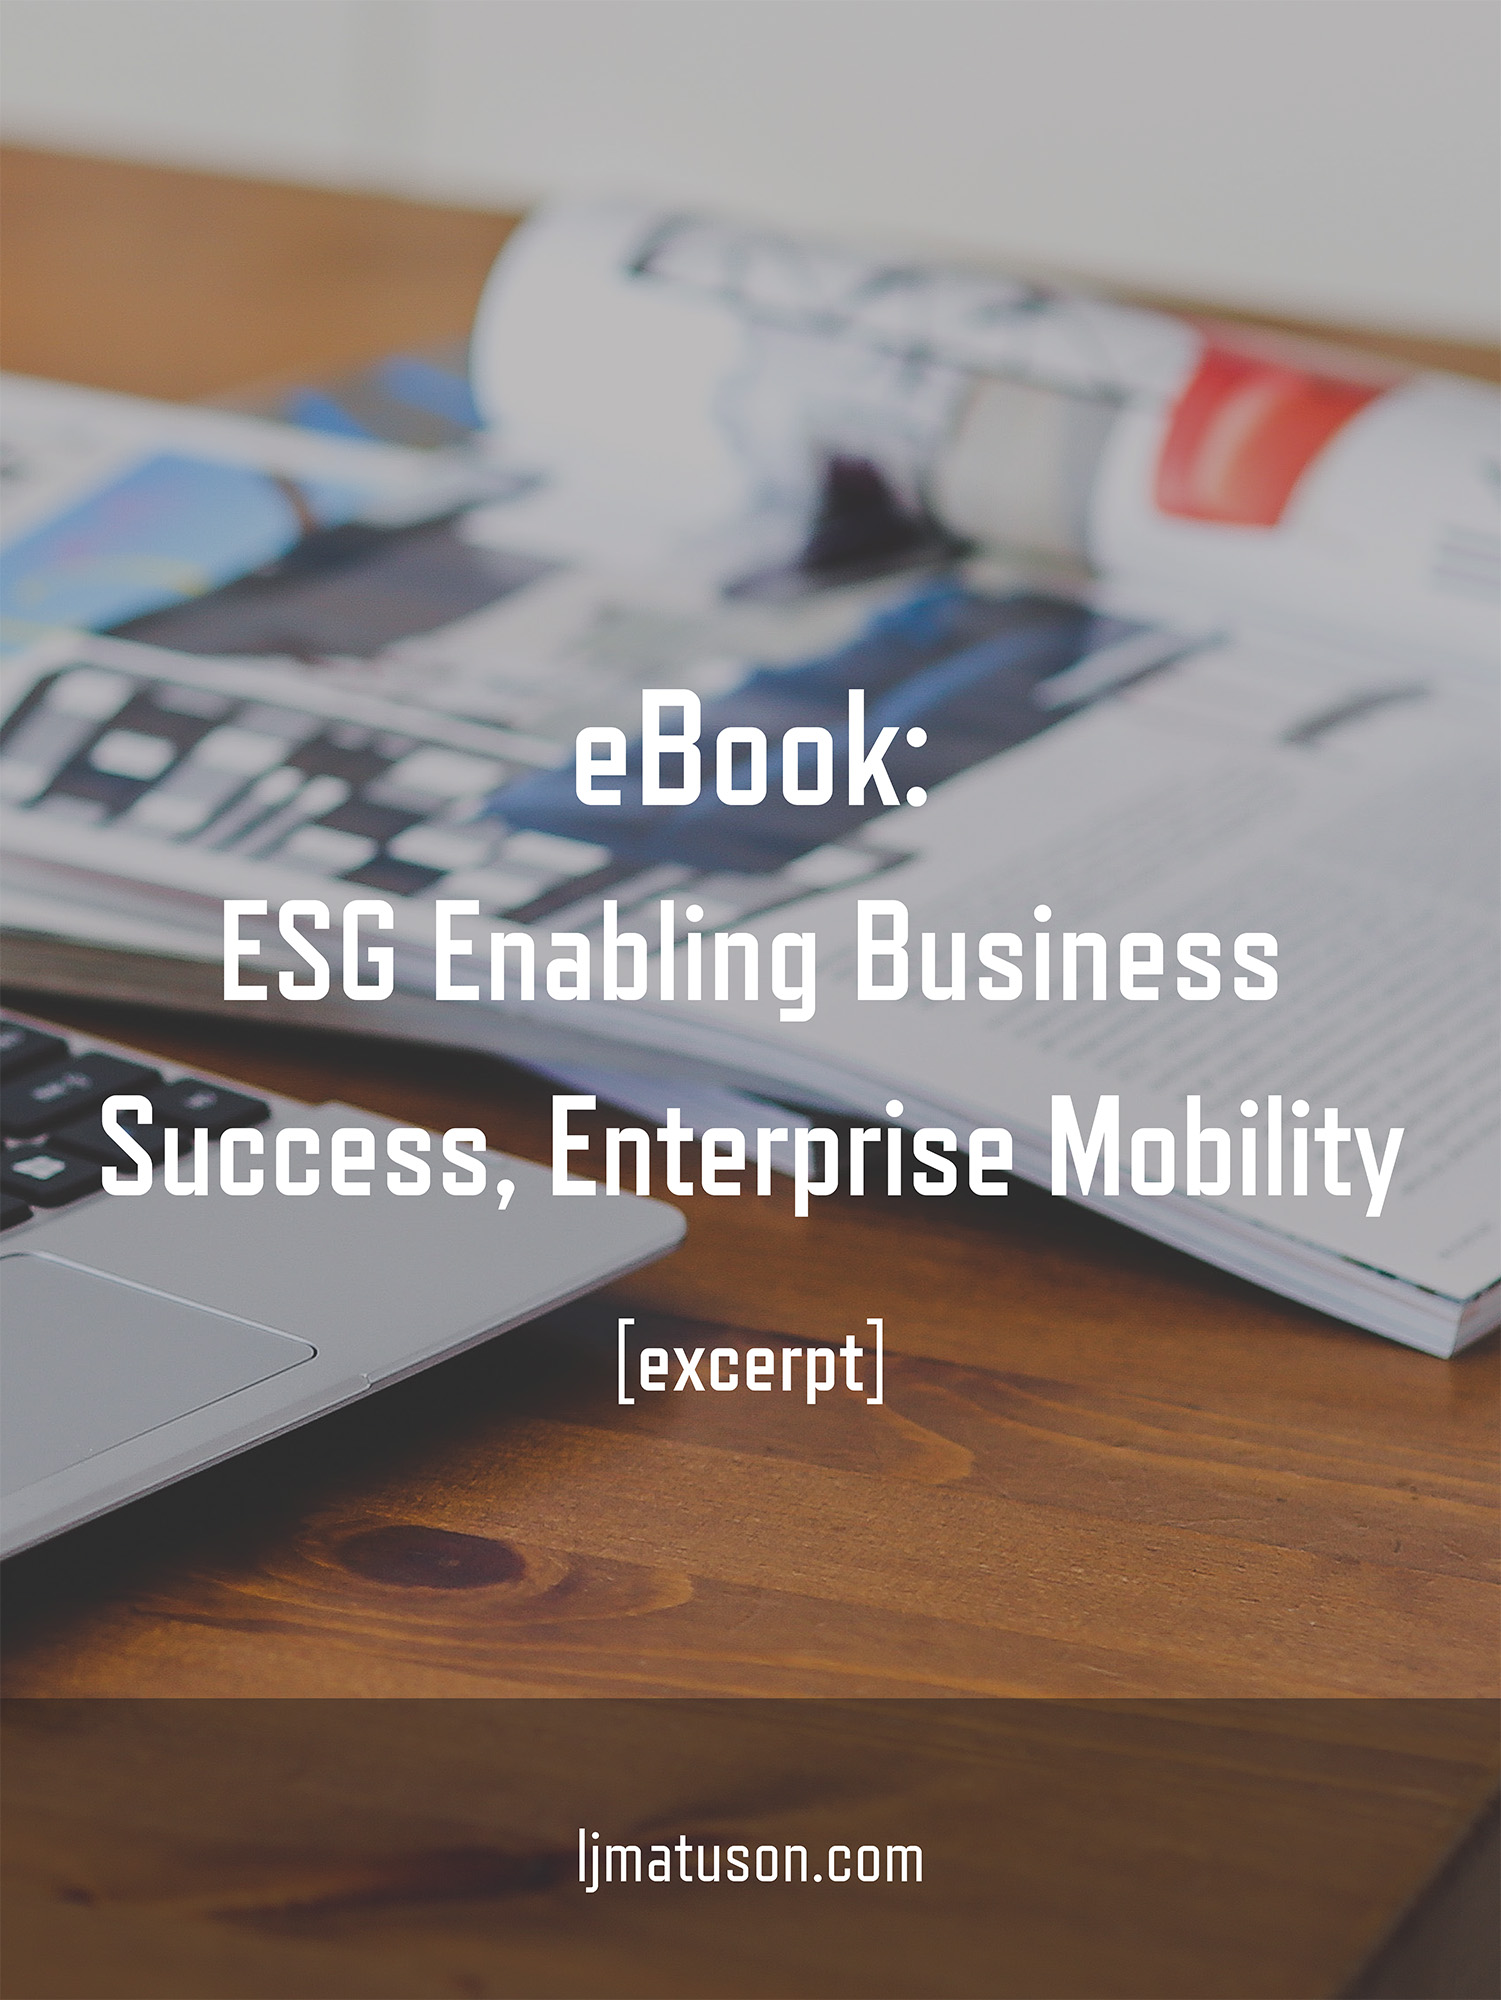 LeahMatuson_ESG_eBook_Enterprise-Mobility-Success.jpg